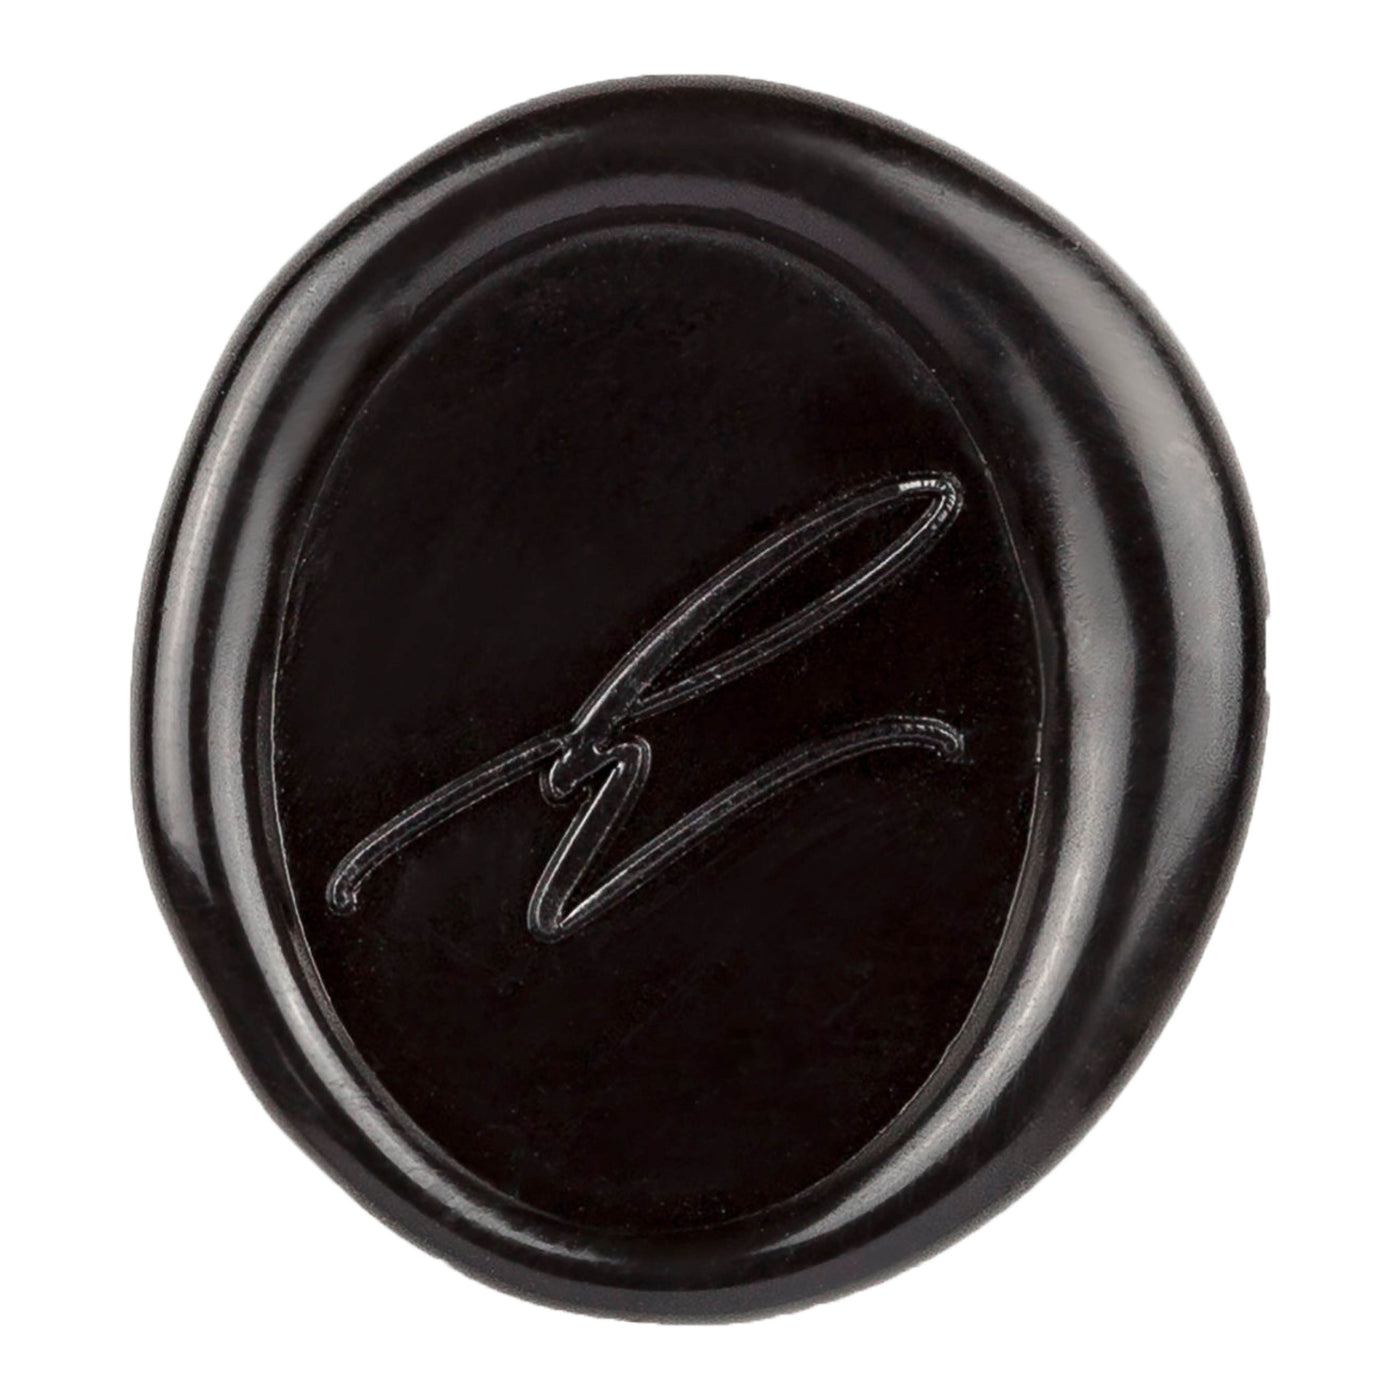 'Coal' - Black Glue Gun Sealing Wax Sticks - Single Stick